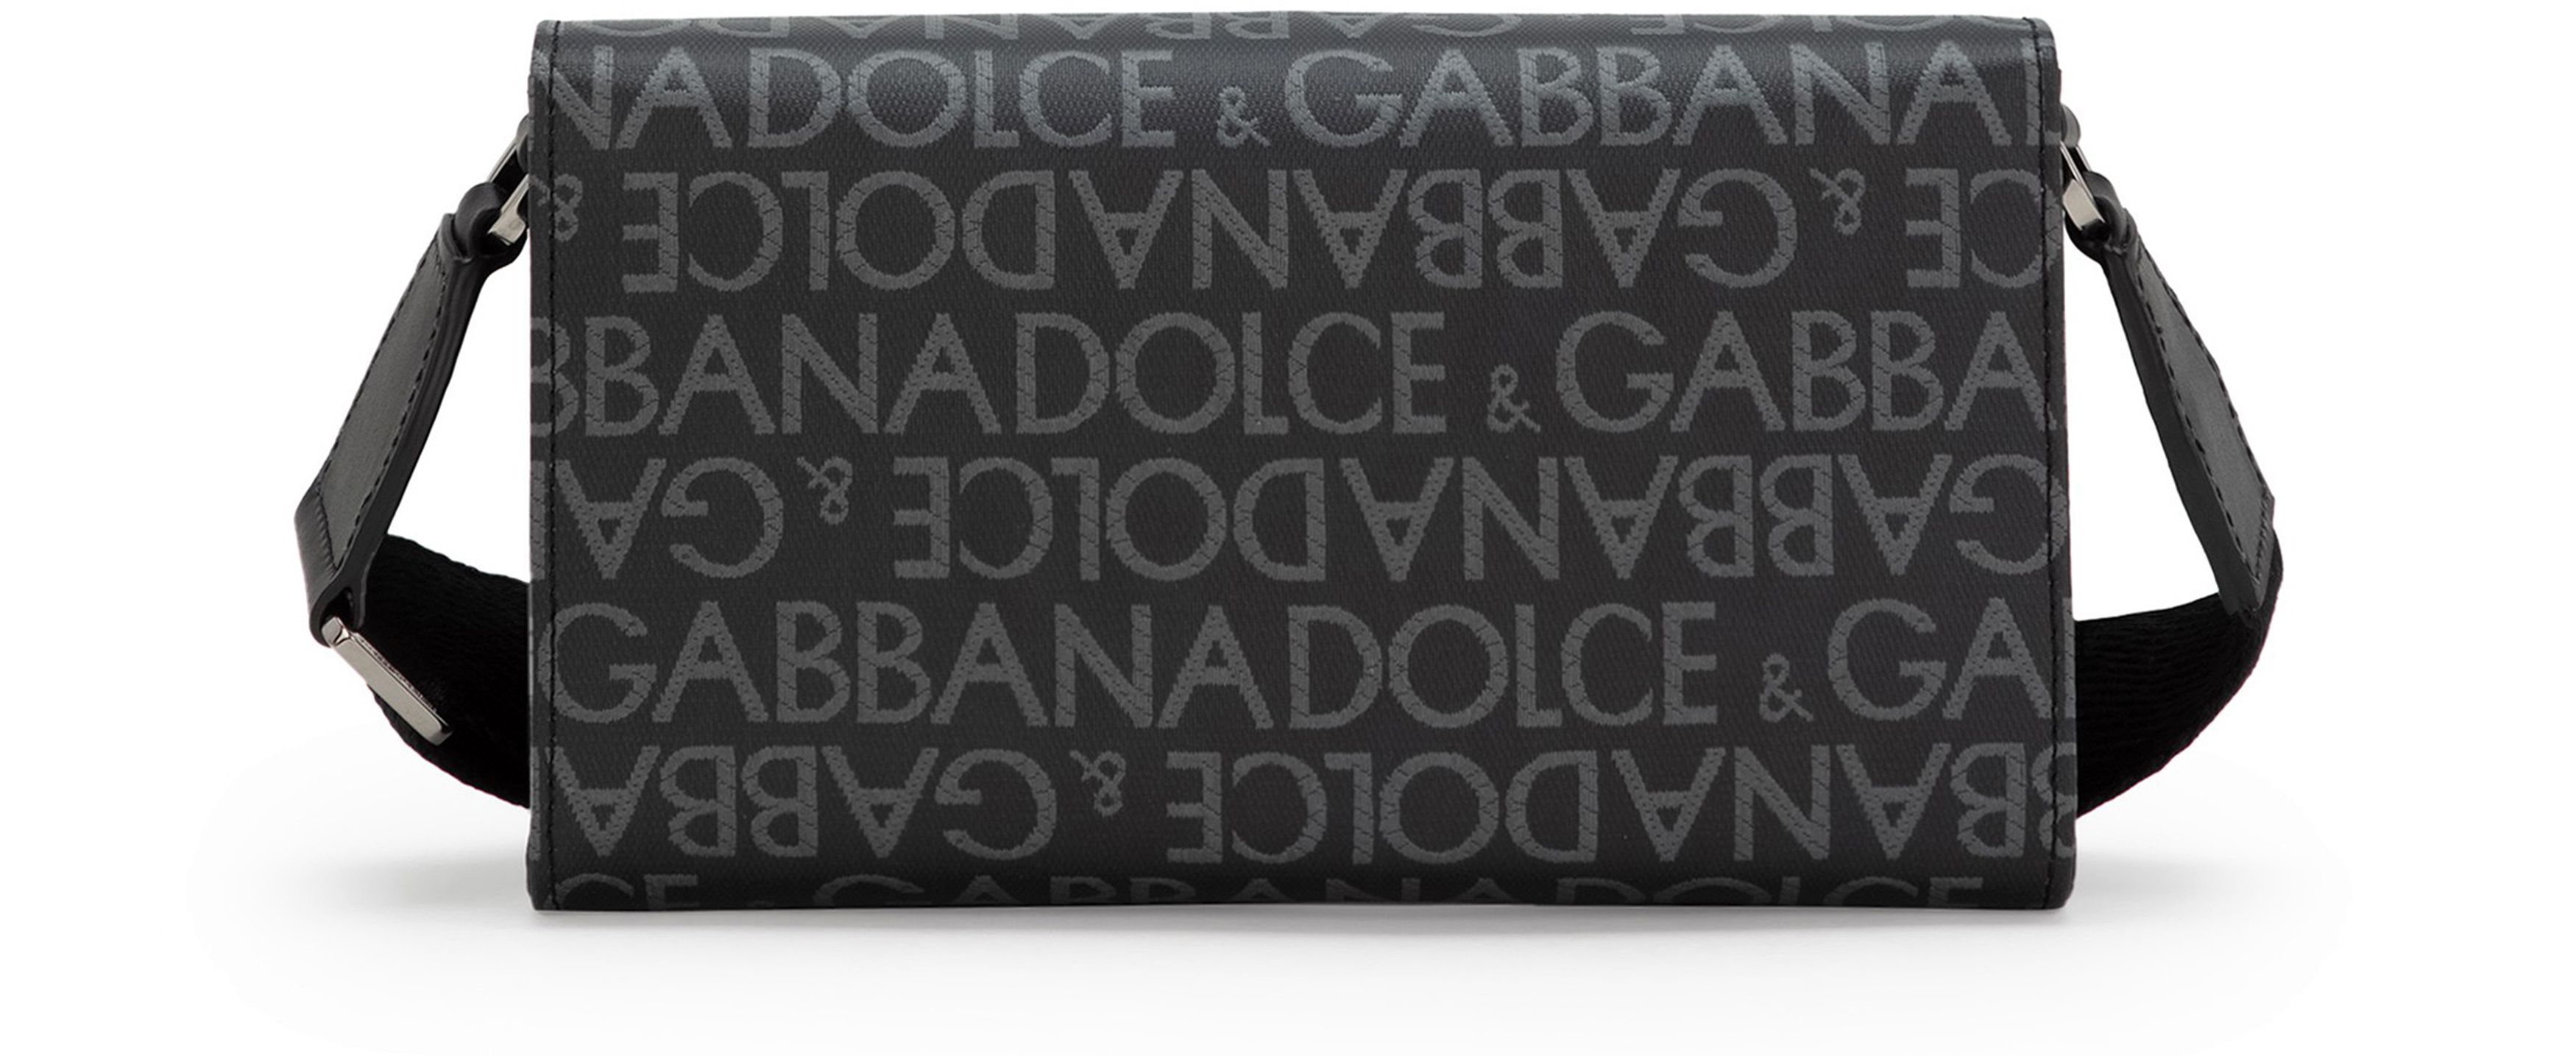 Dolce & Gabbana Coated jacquard crossbody bag